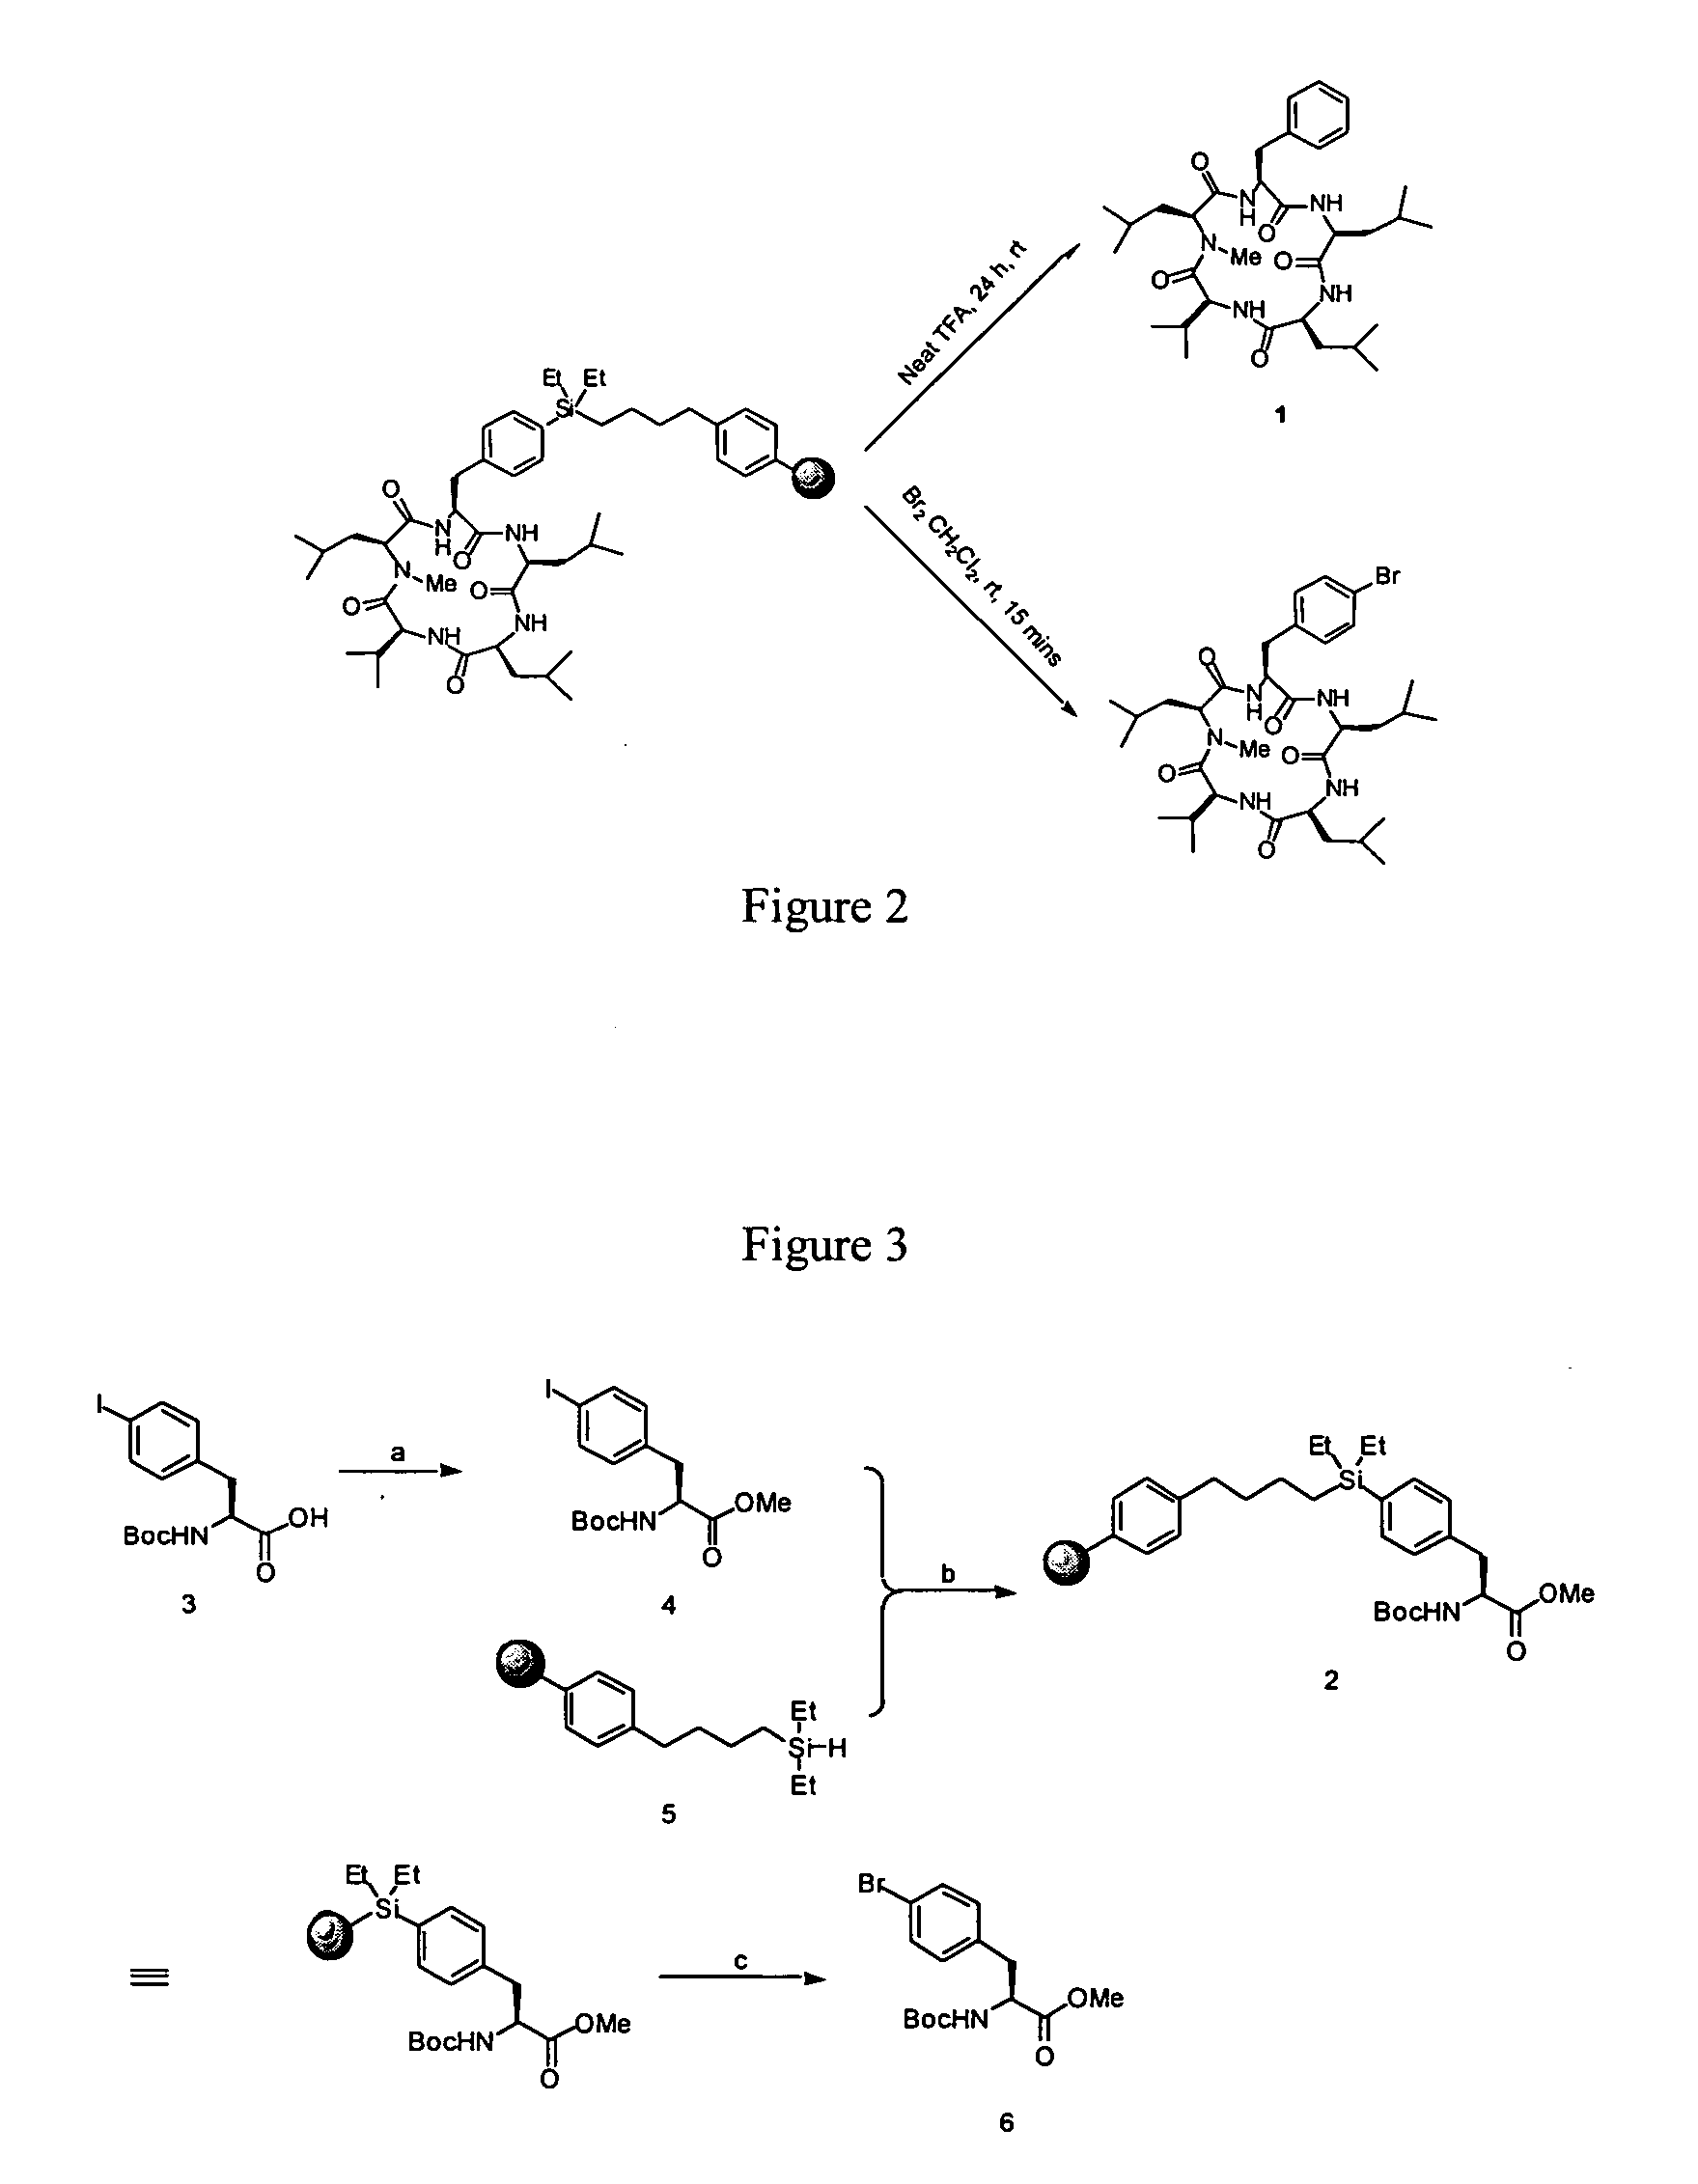 Cyclic peptide antitumor agents